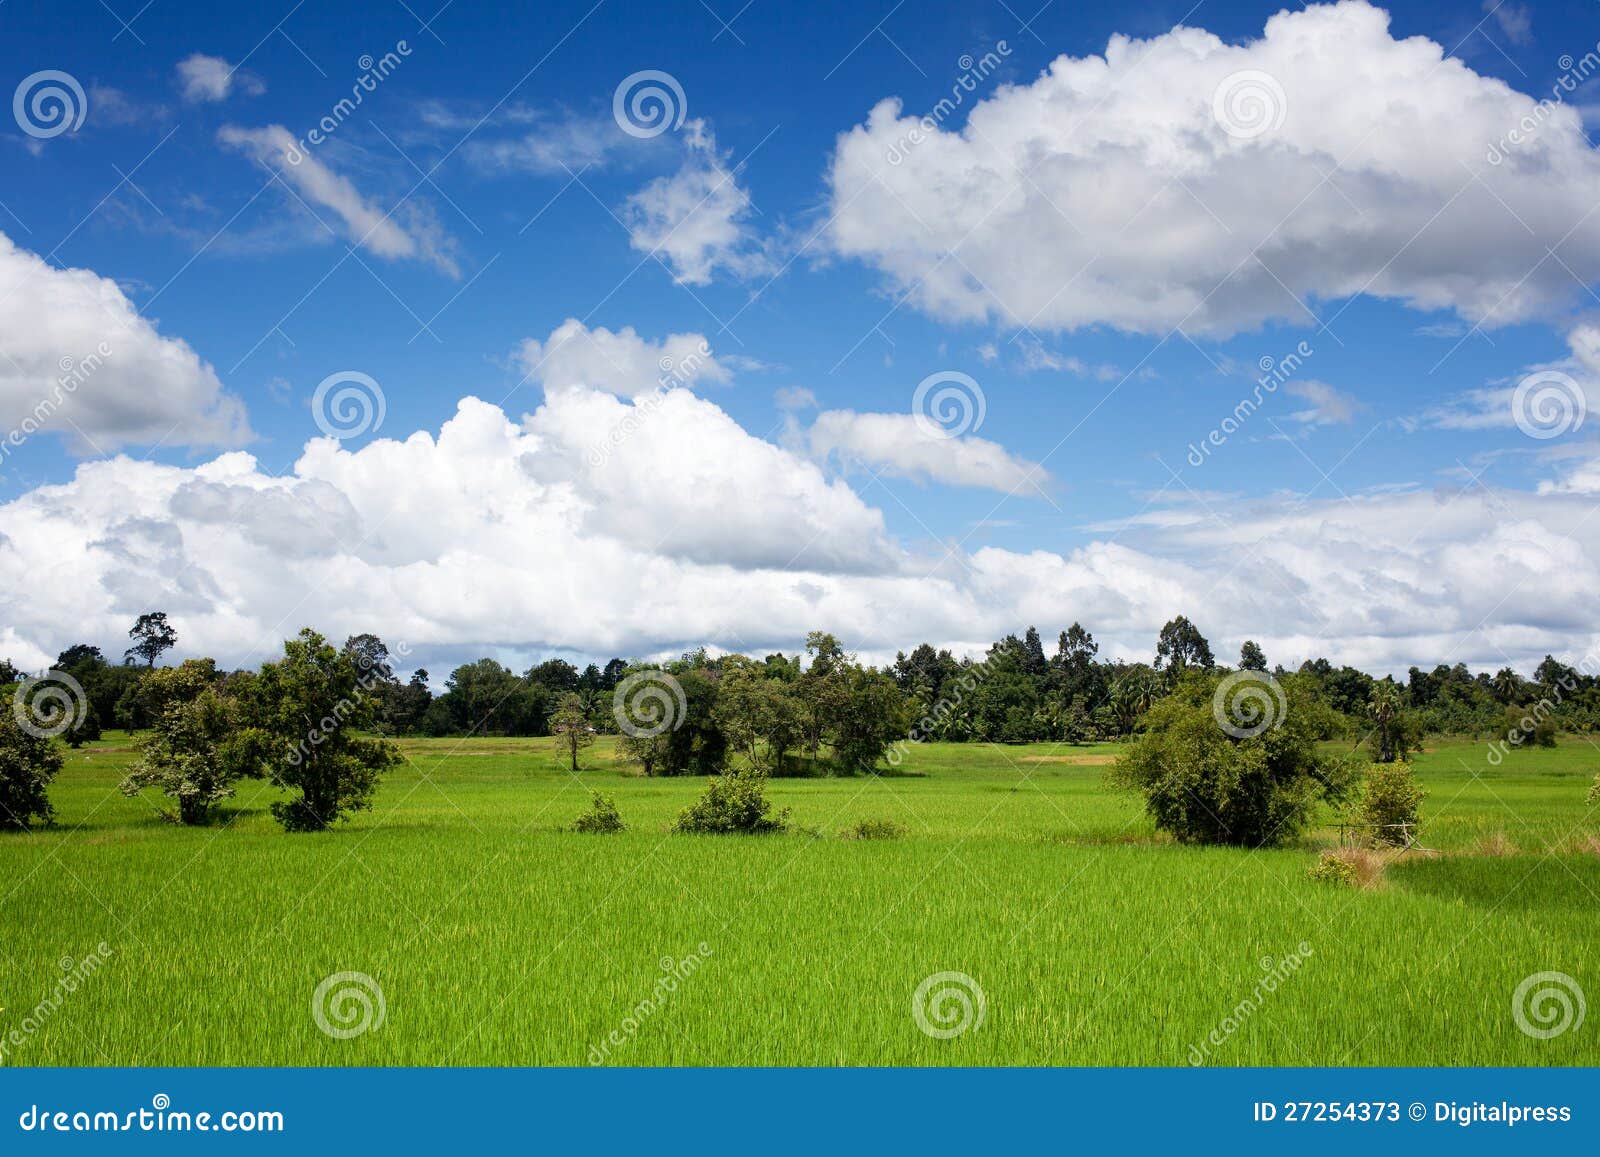 Beautiful Landscape Asia Stock Image Image Of Paddy 27254373